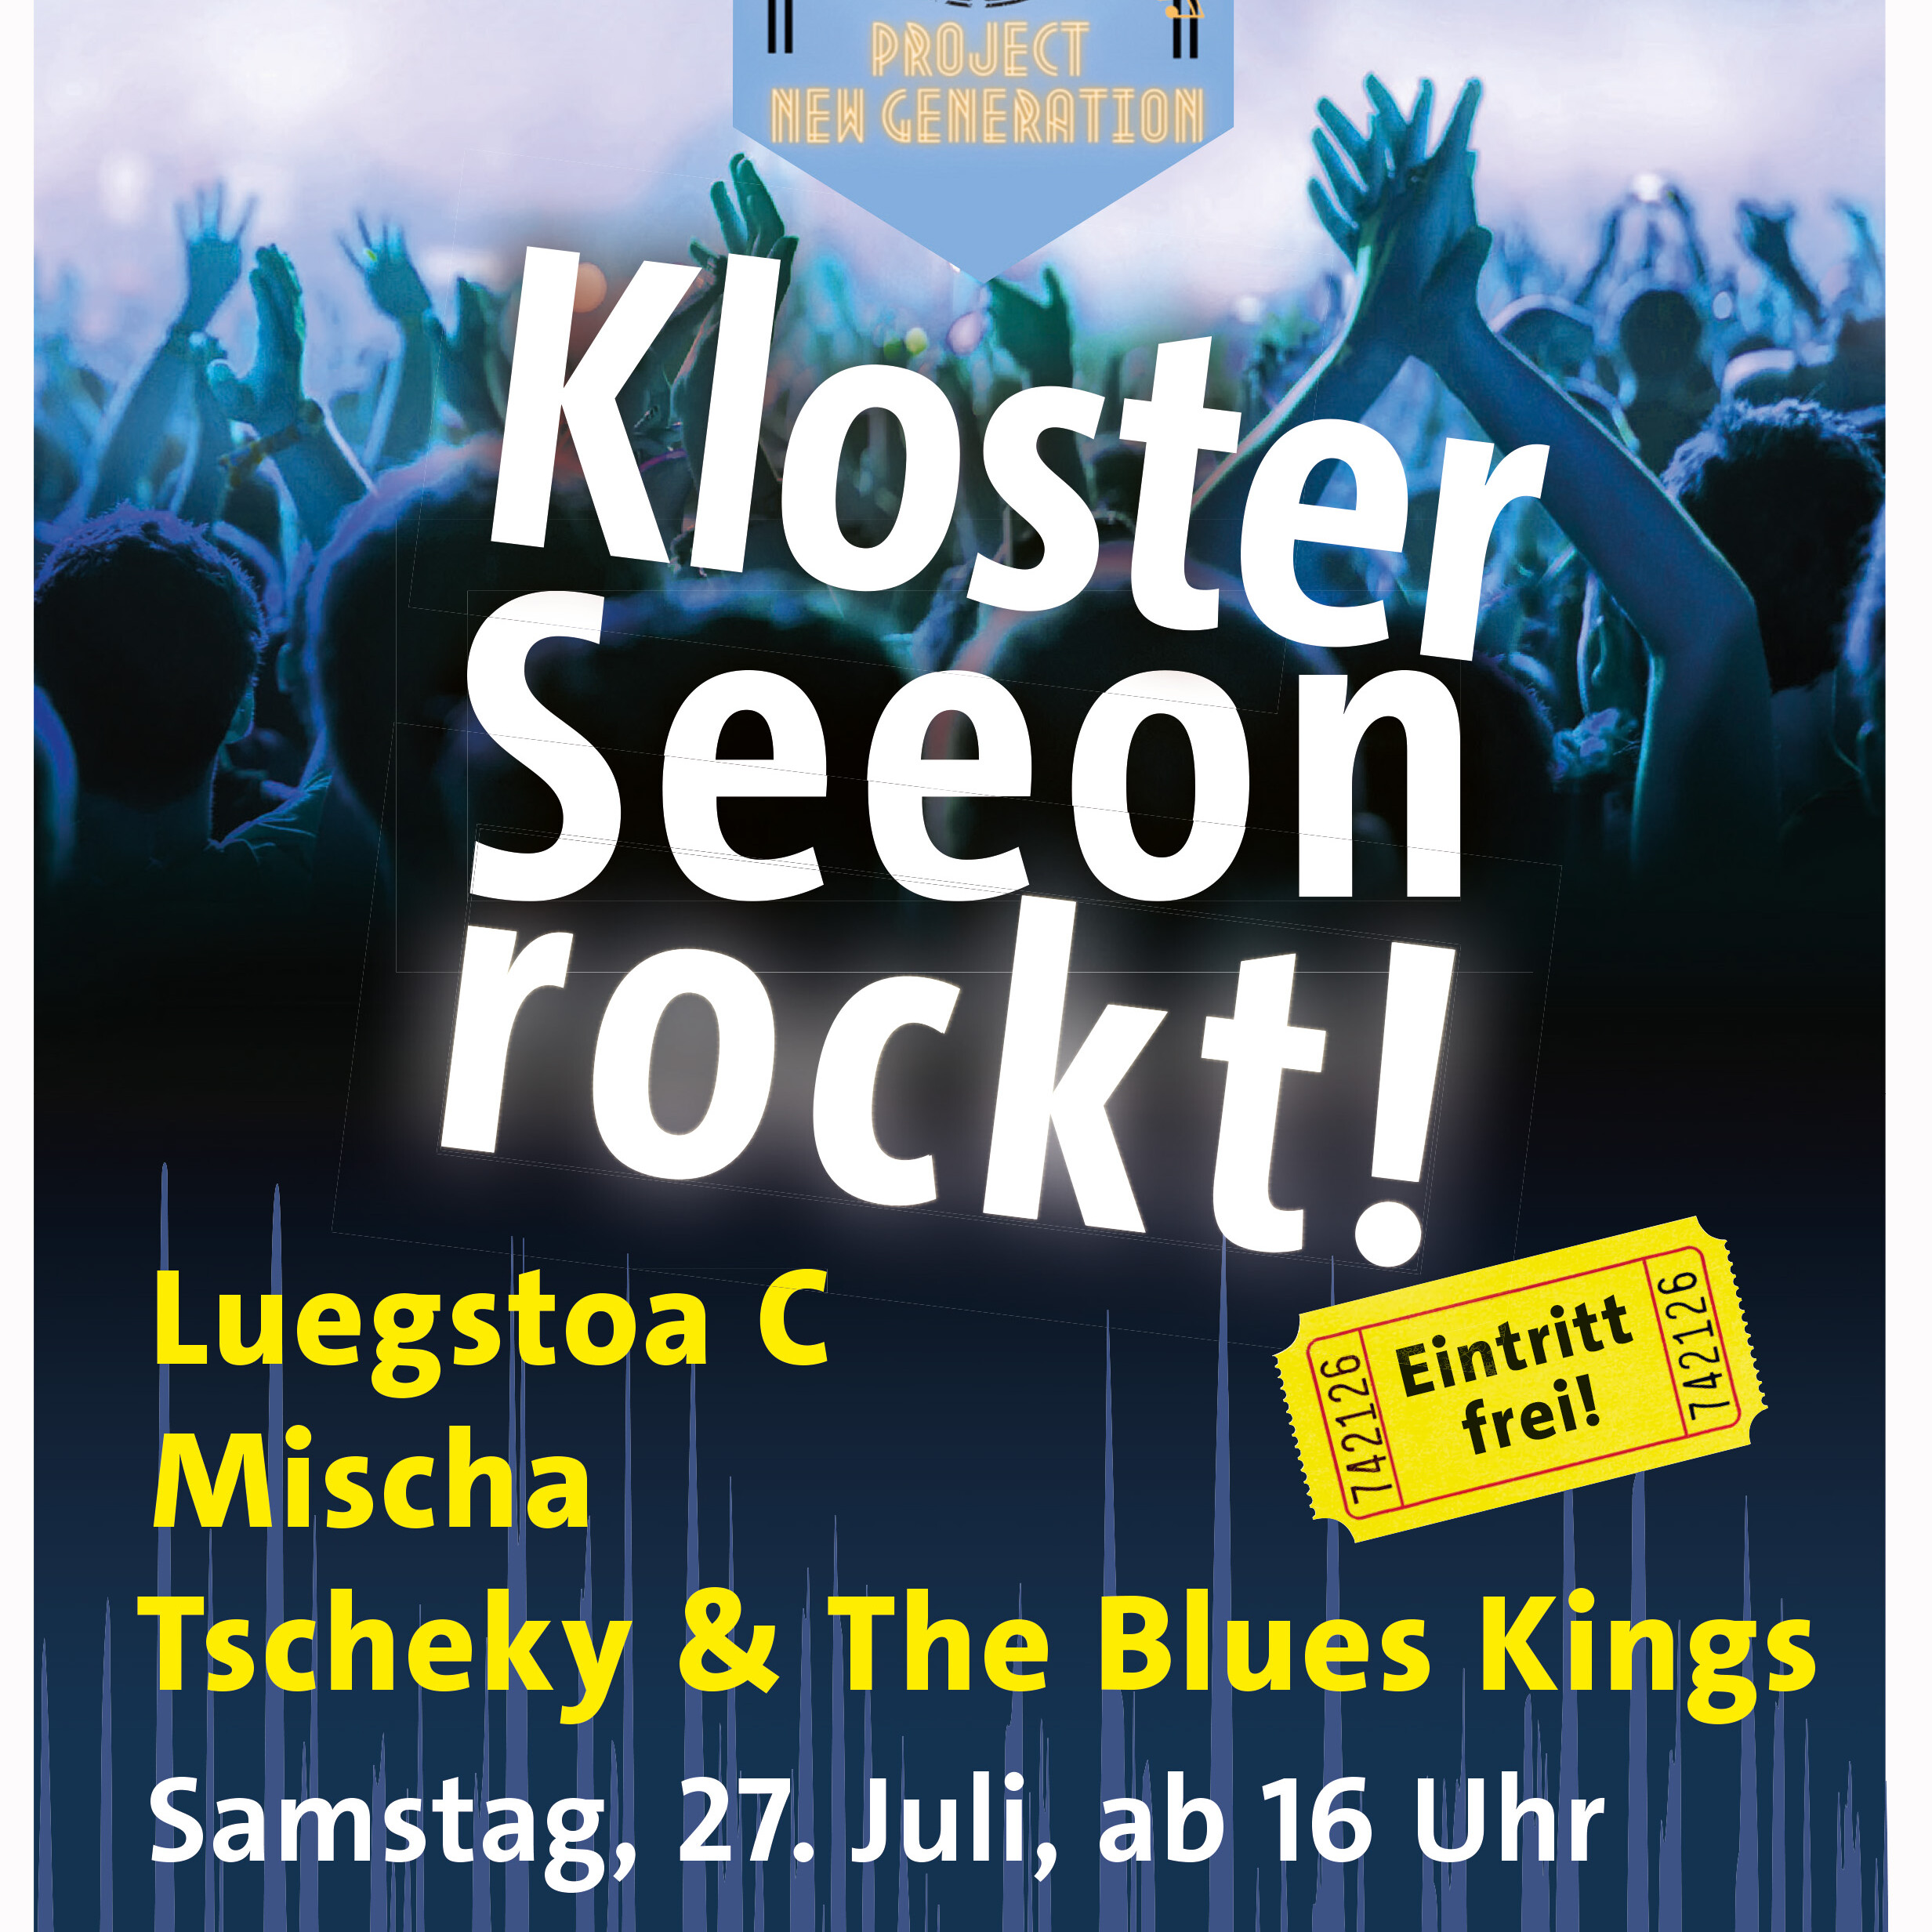 Plakat Kloster Seeon rockt 2024 mit jubelnder Menge,  den drei Bandnamen Luegstoa C, Mischa, Tscheky & The Blues Kings